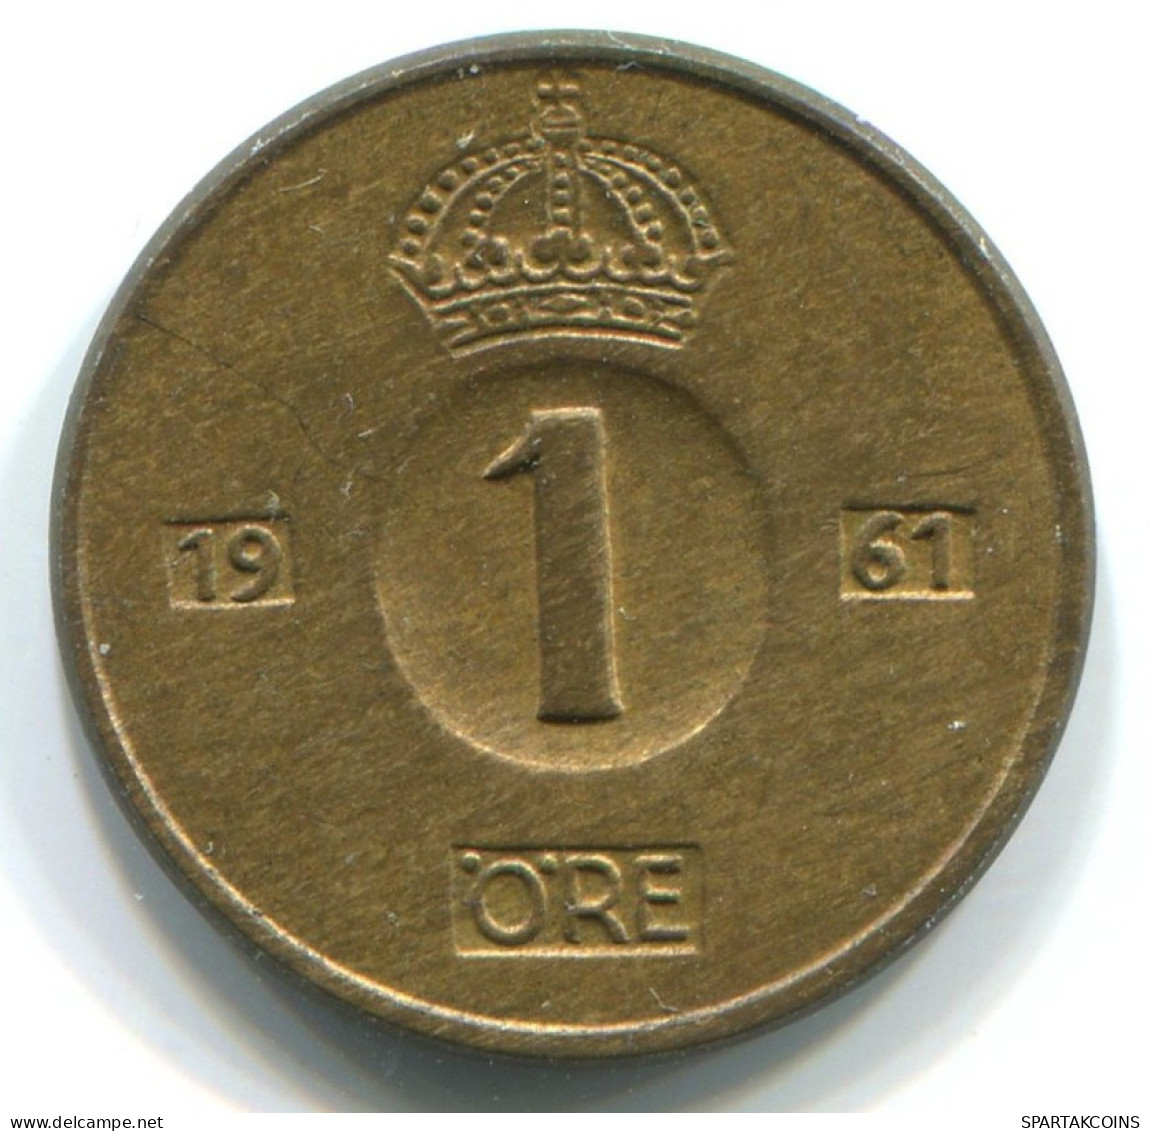 1 ORE 1961 SWEDEN Coin #WW1106.U.A - Zweden